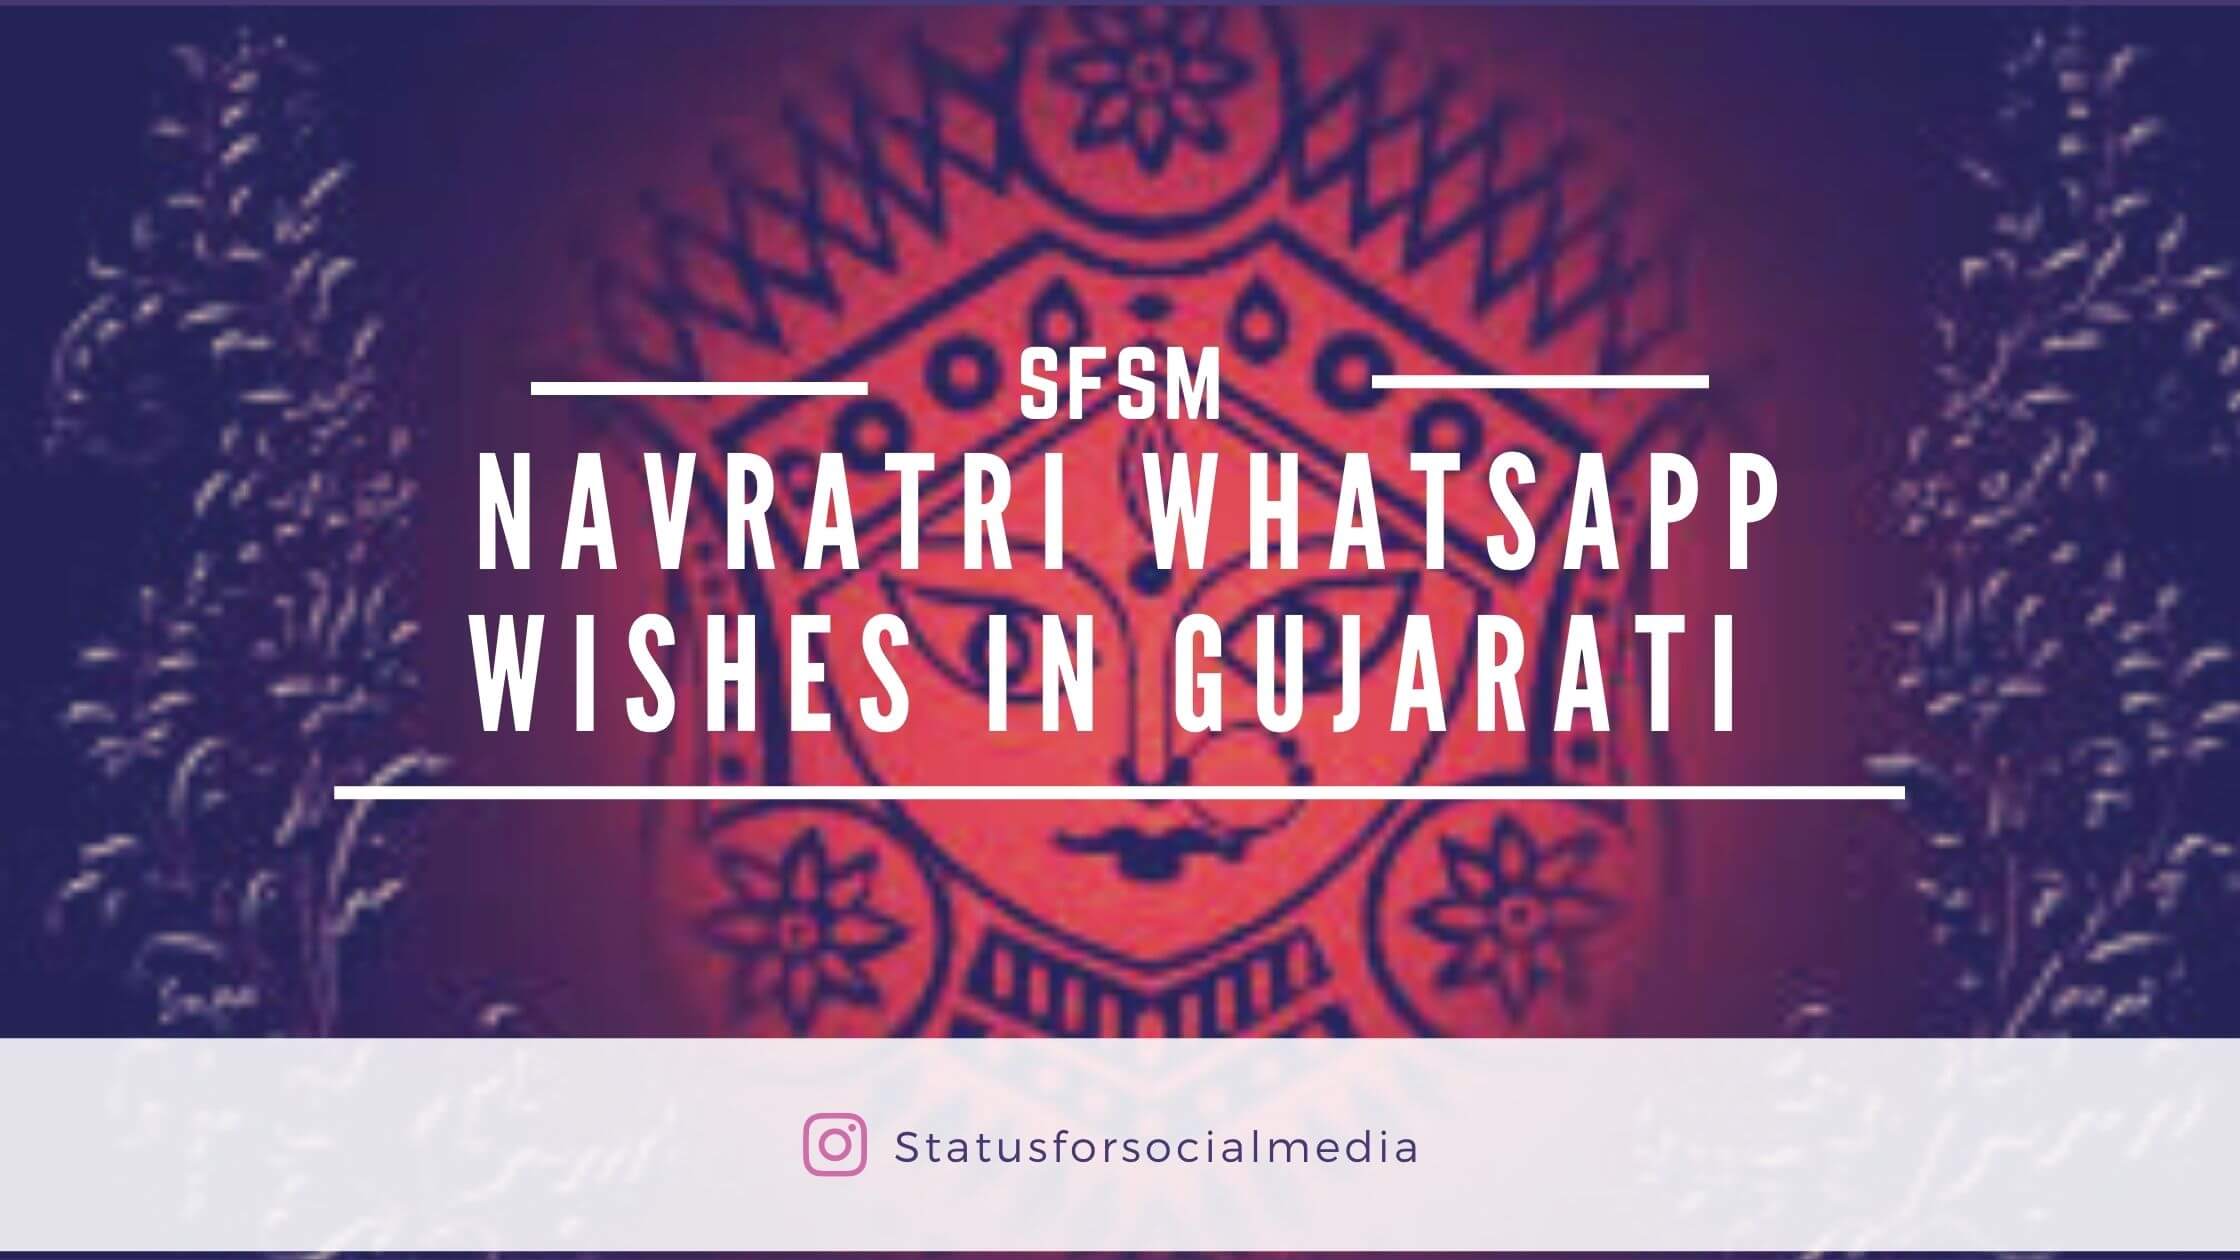 Navratri Whatsapp Wishes in Gujarati - Statusforsocialmedia